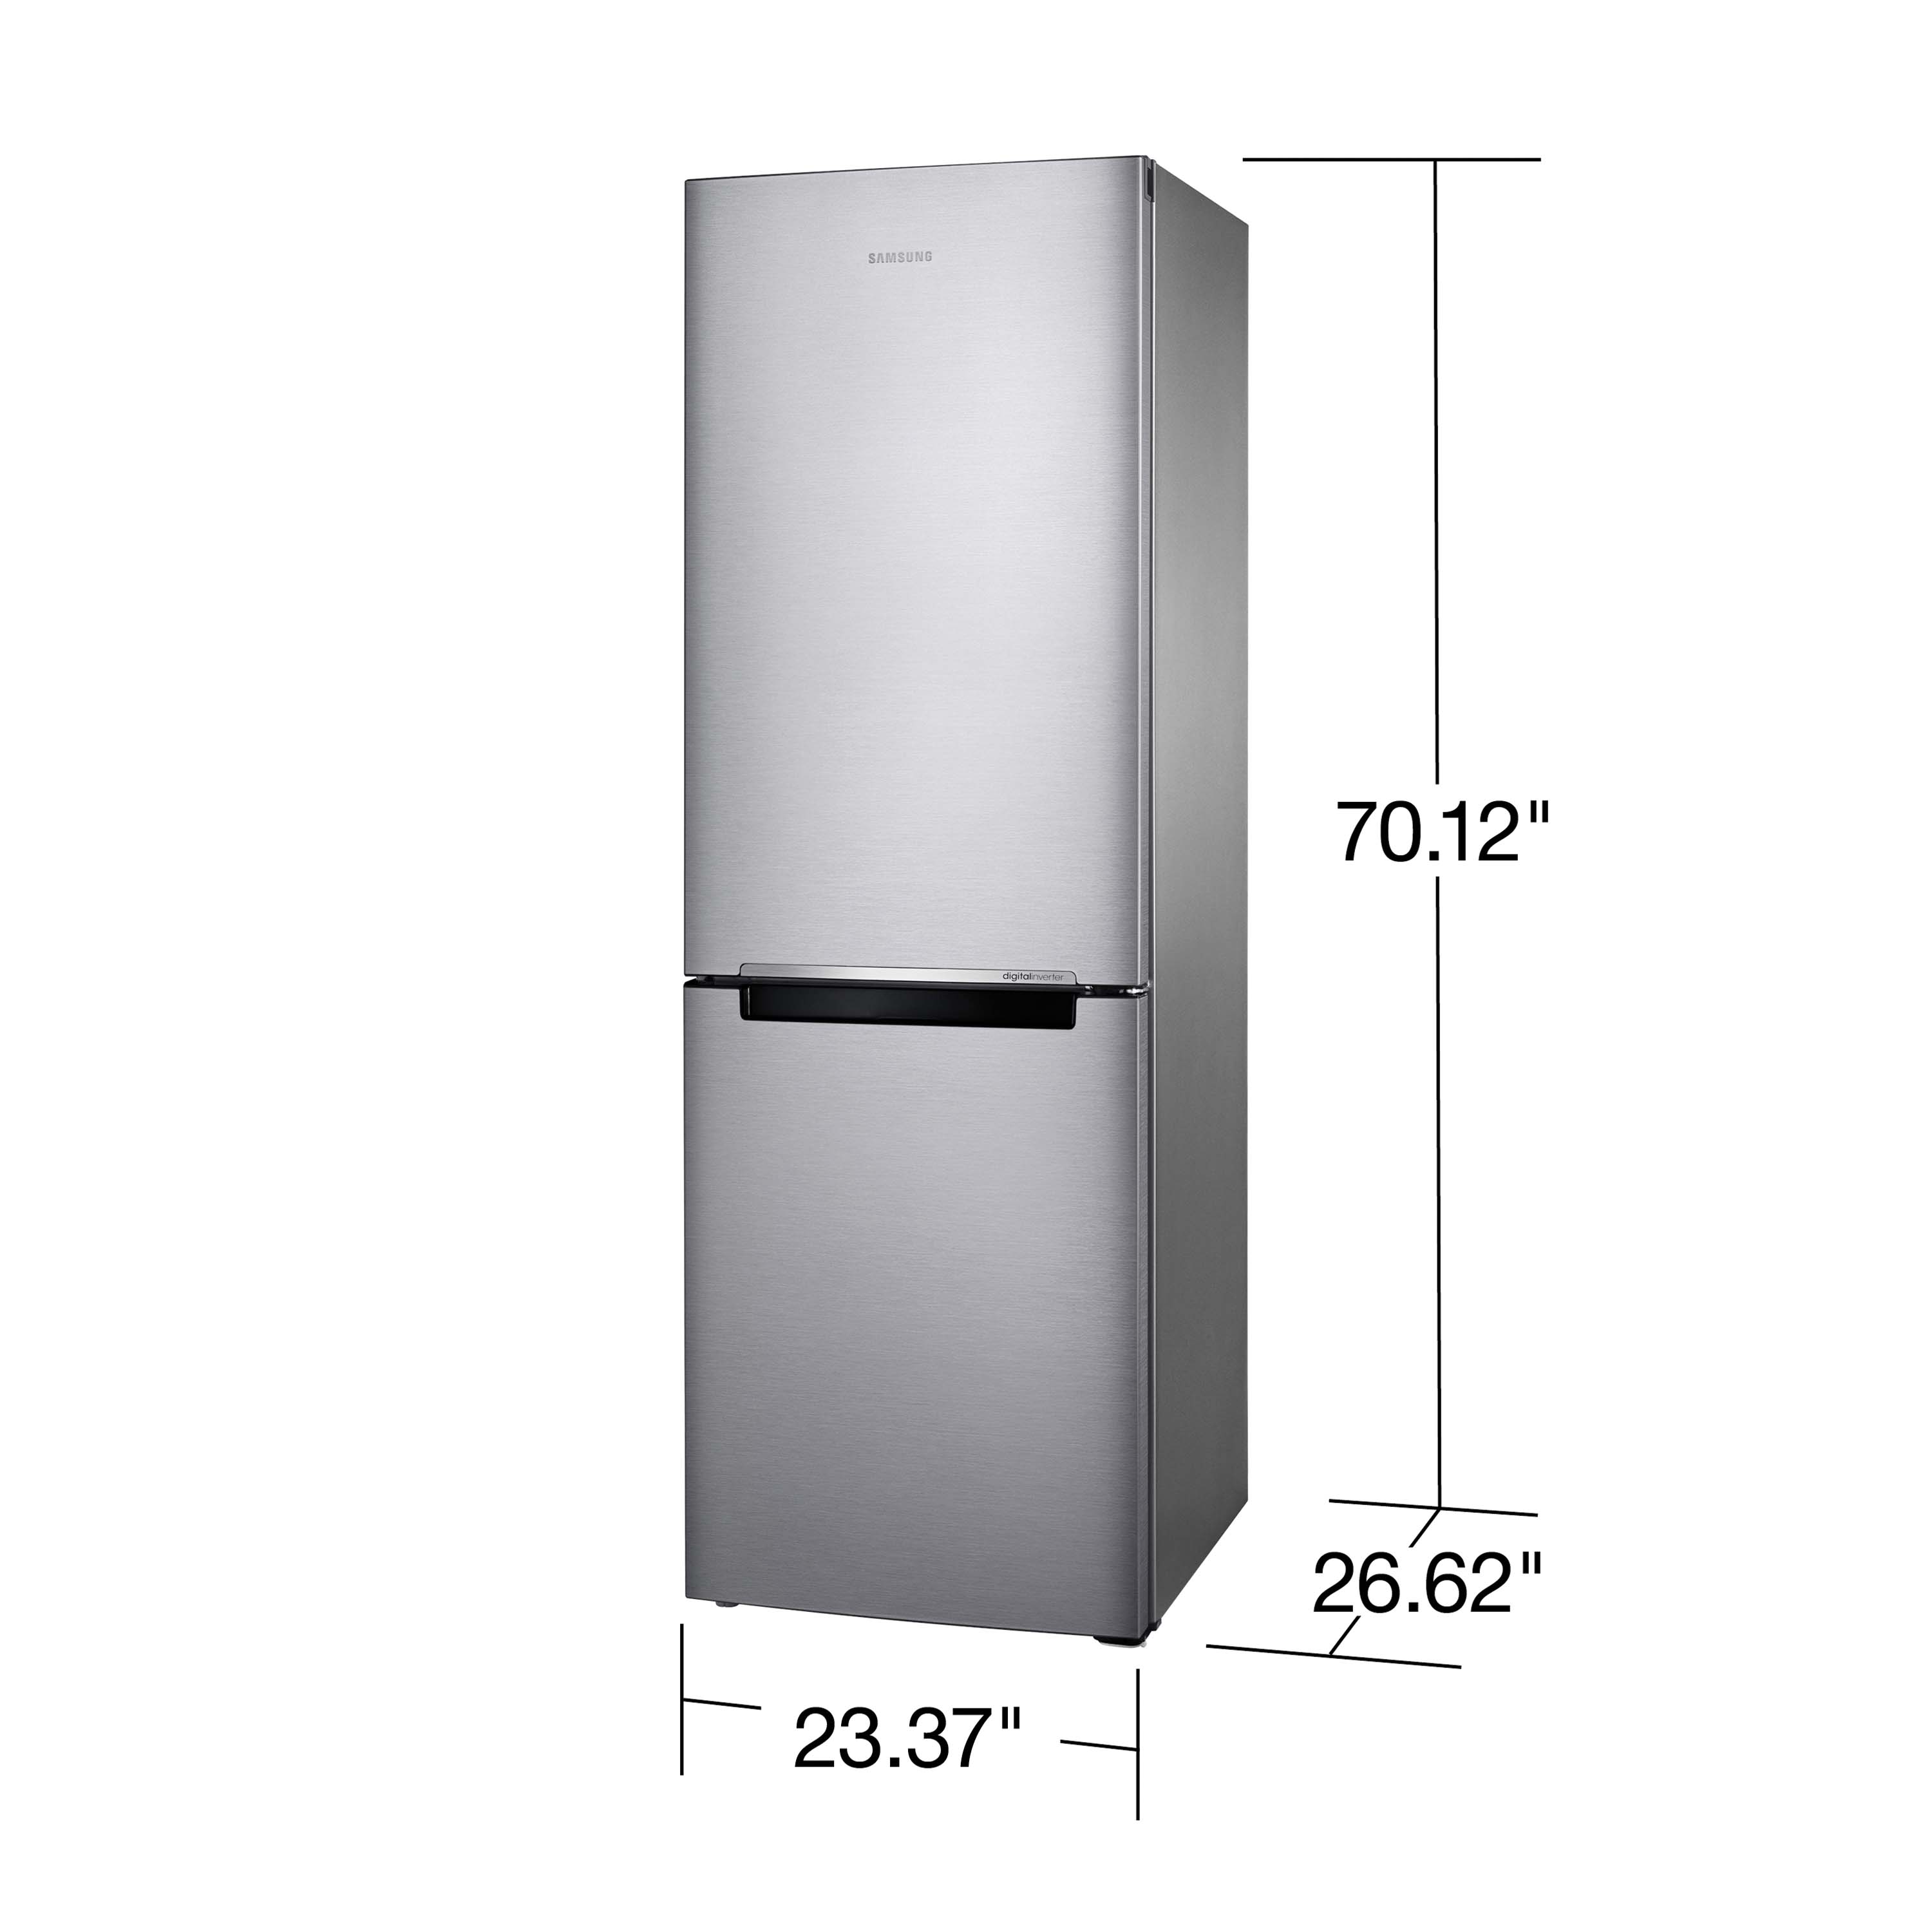 Samsung 11.3-cu ft Counter-depth Bottom-Freezer Refrigerator (Fingerprint  Resistant Stainless Steel) ENERGY STAR at